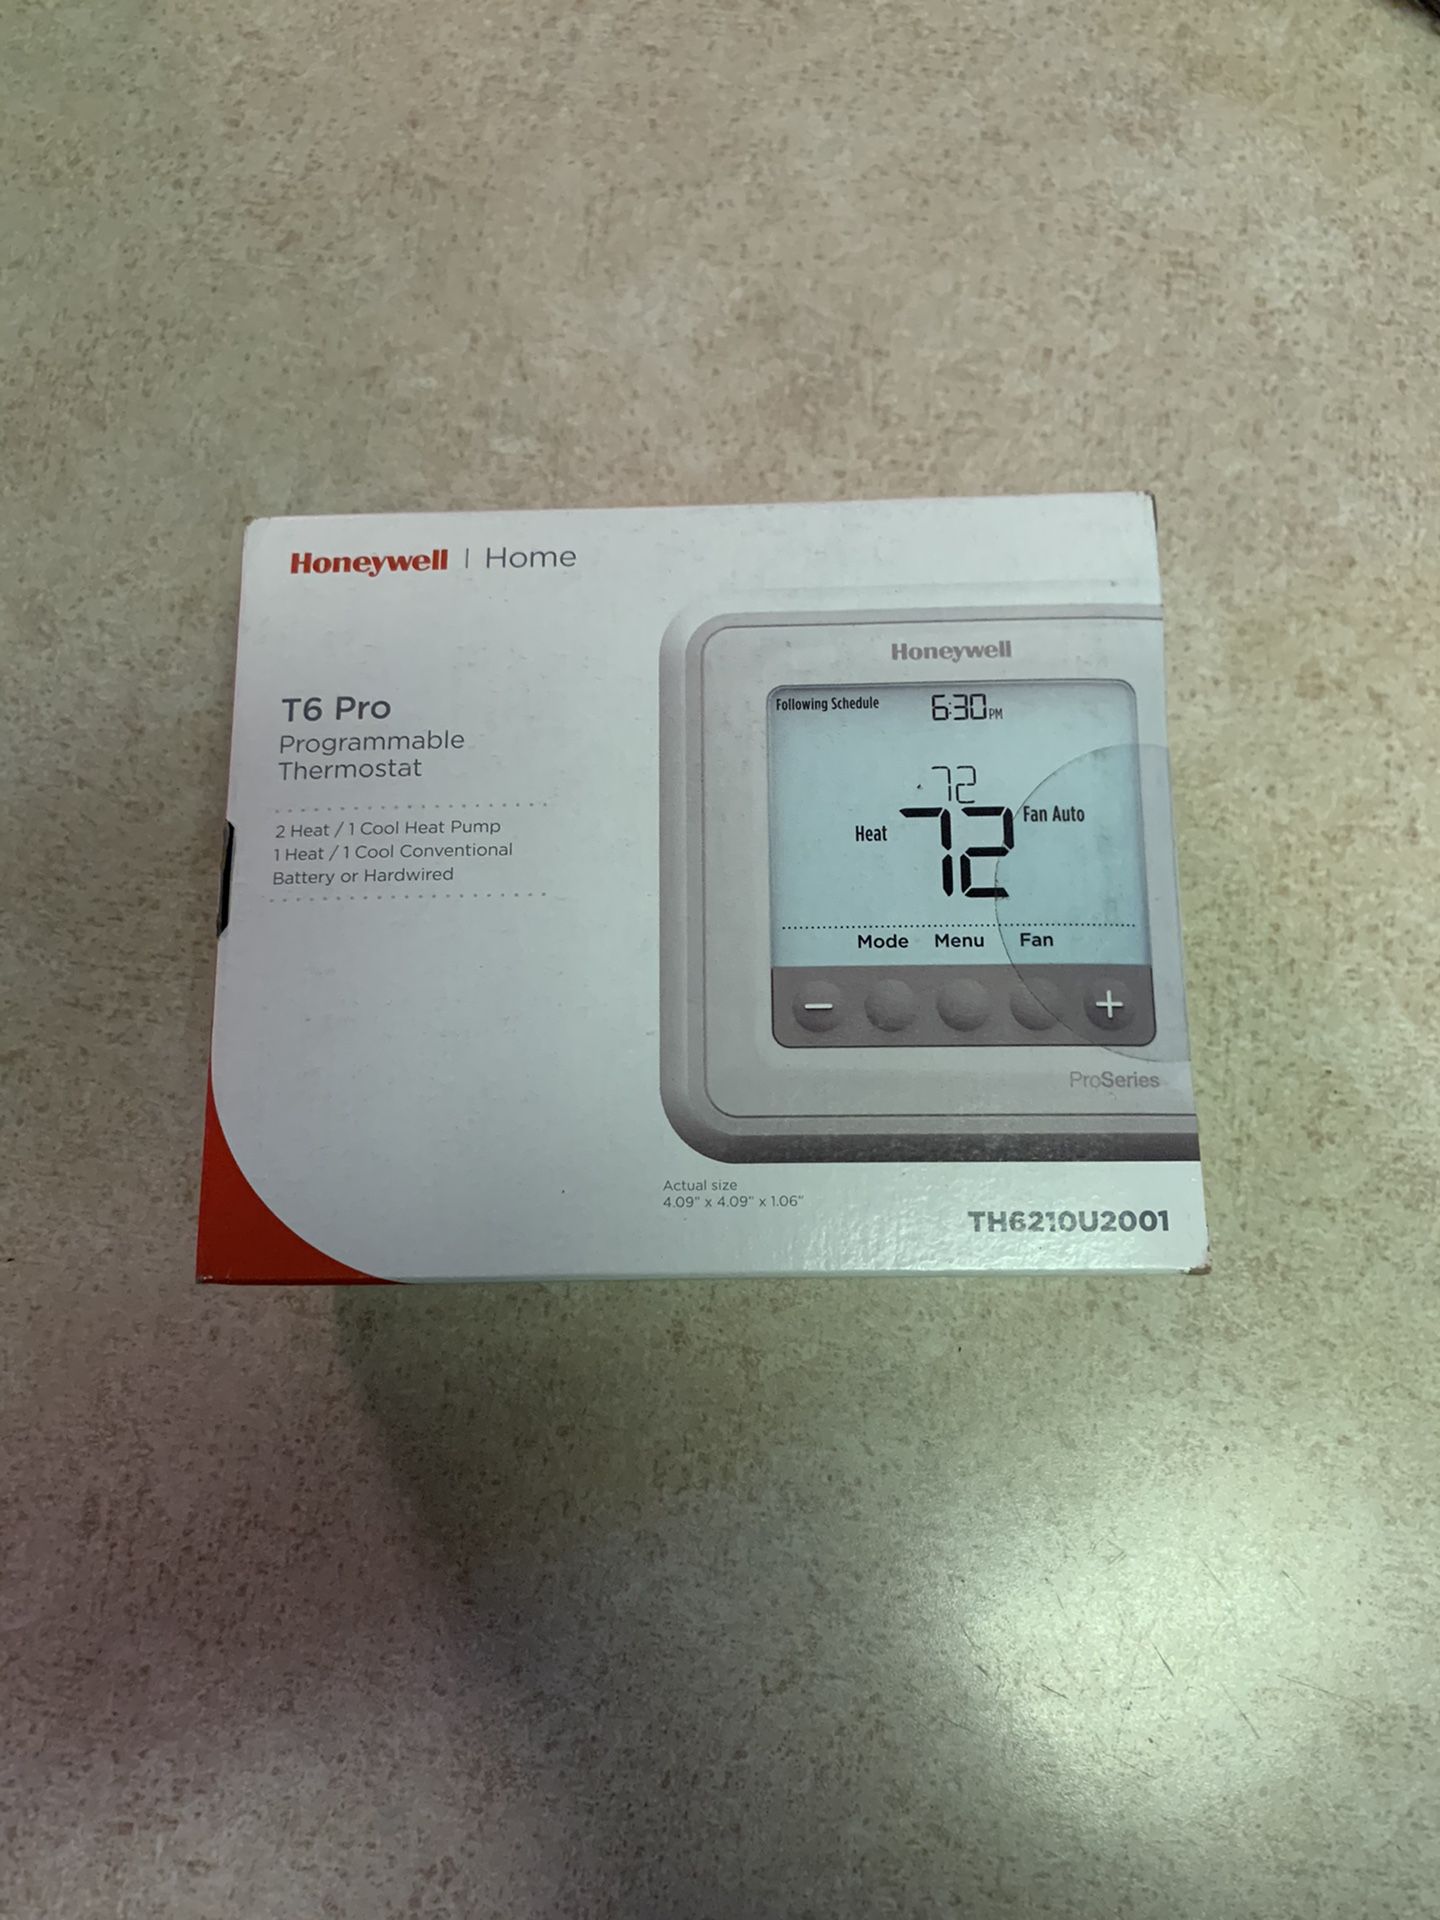 Honeywell T6 Pro Thermostats